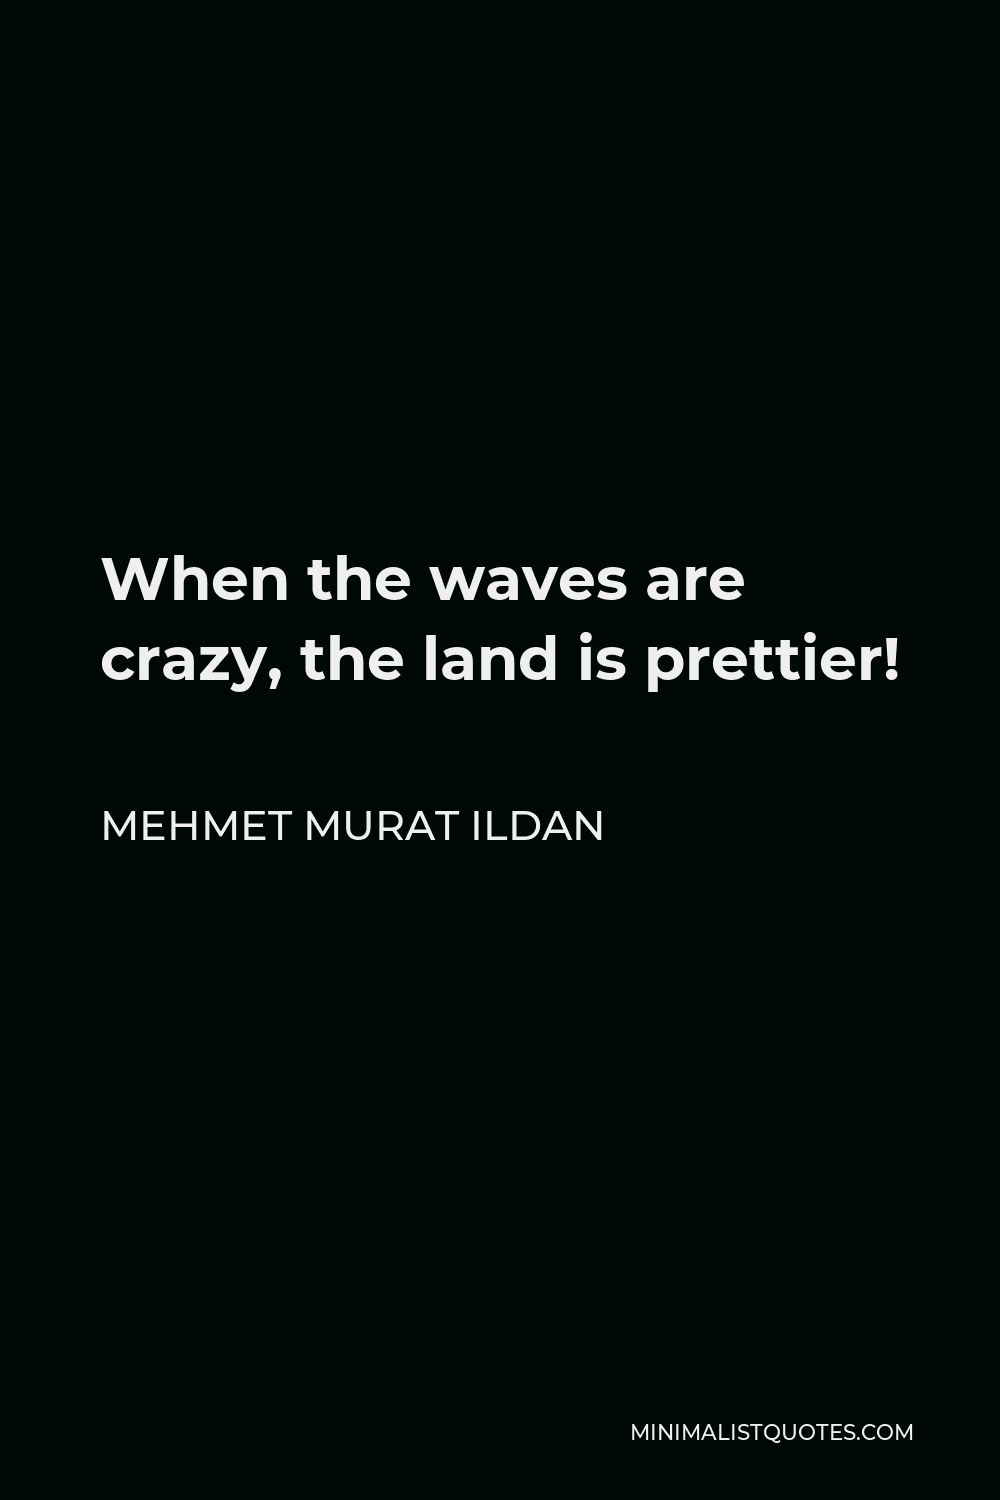 Mehmet Murat Ildan Quote - When the waves are crazy, the land is prettier!